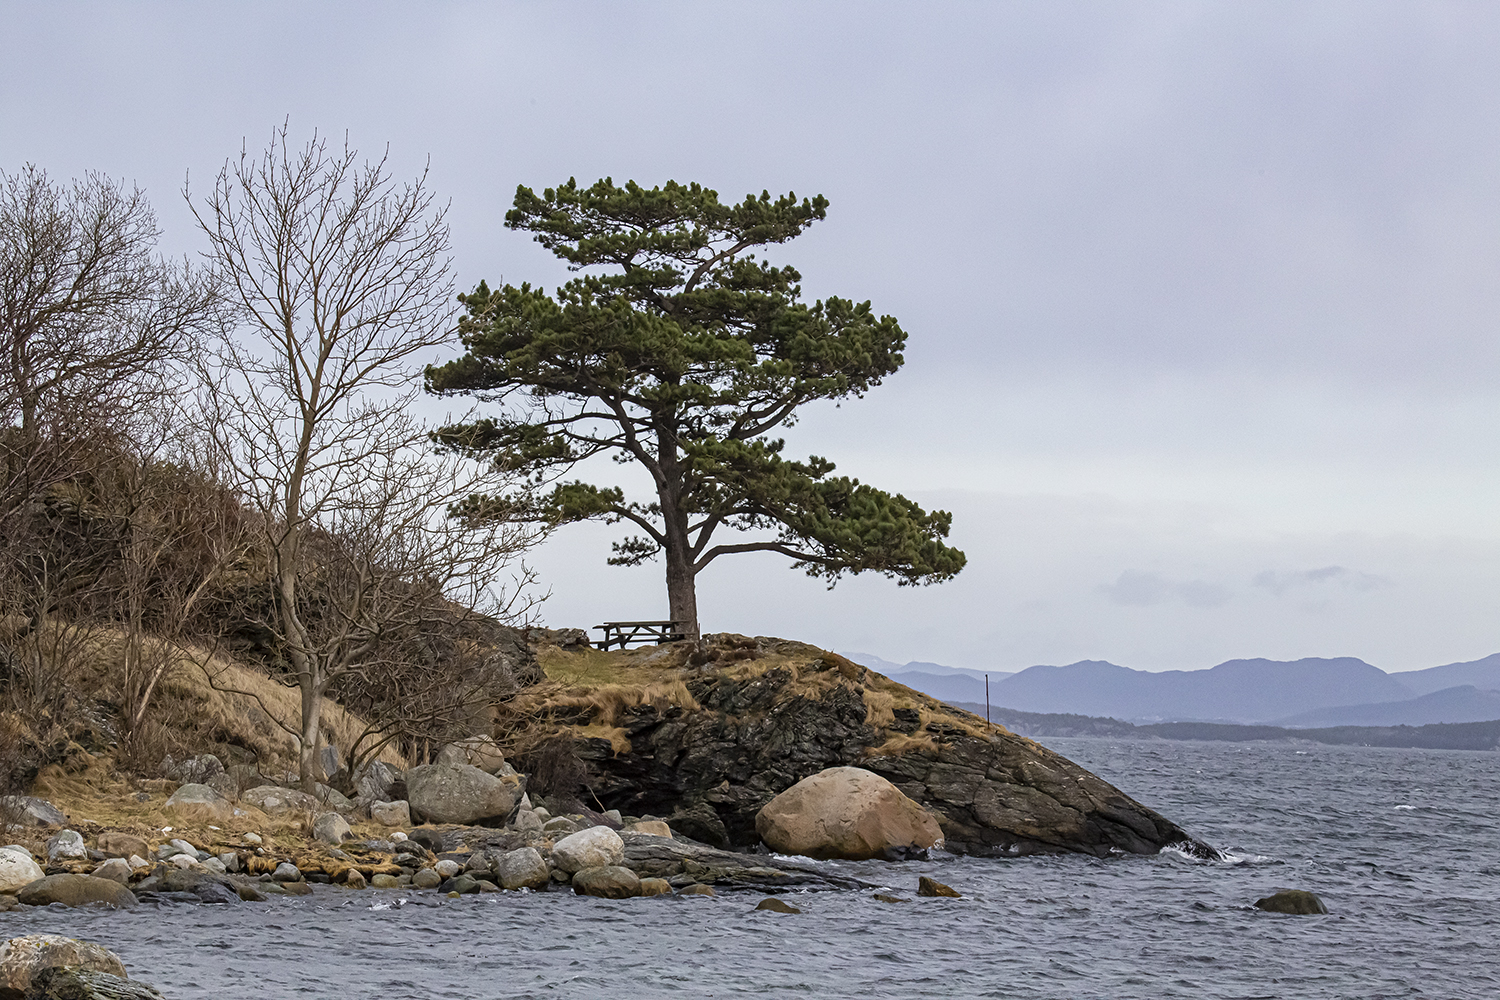 Pine Tree beside Fiord near Stavanger, Norway.